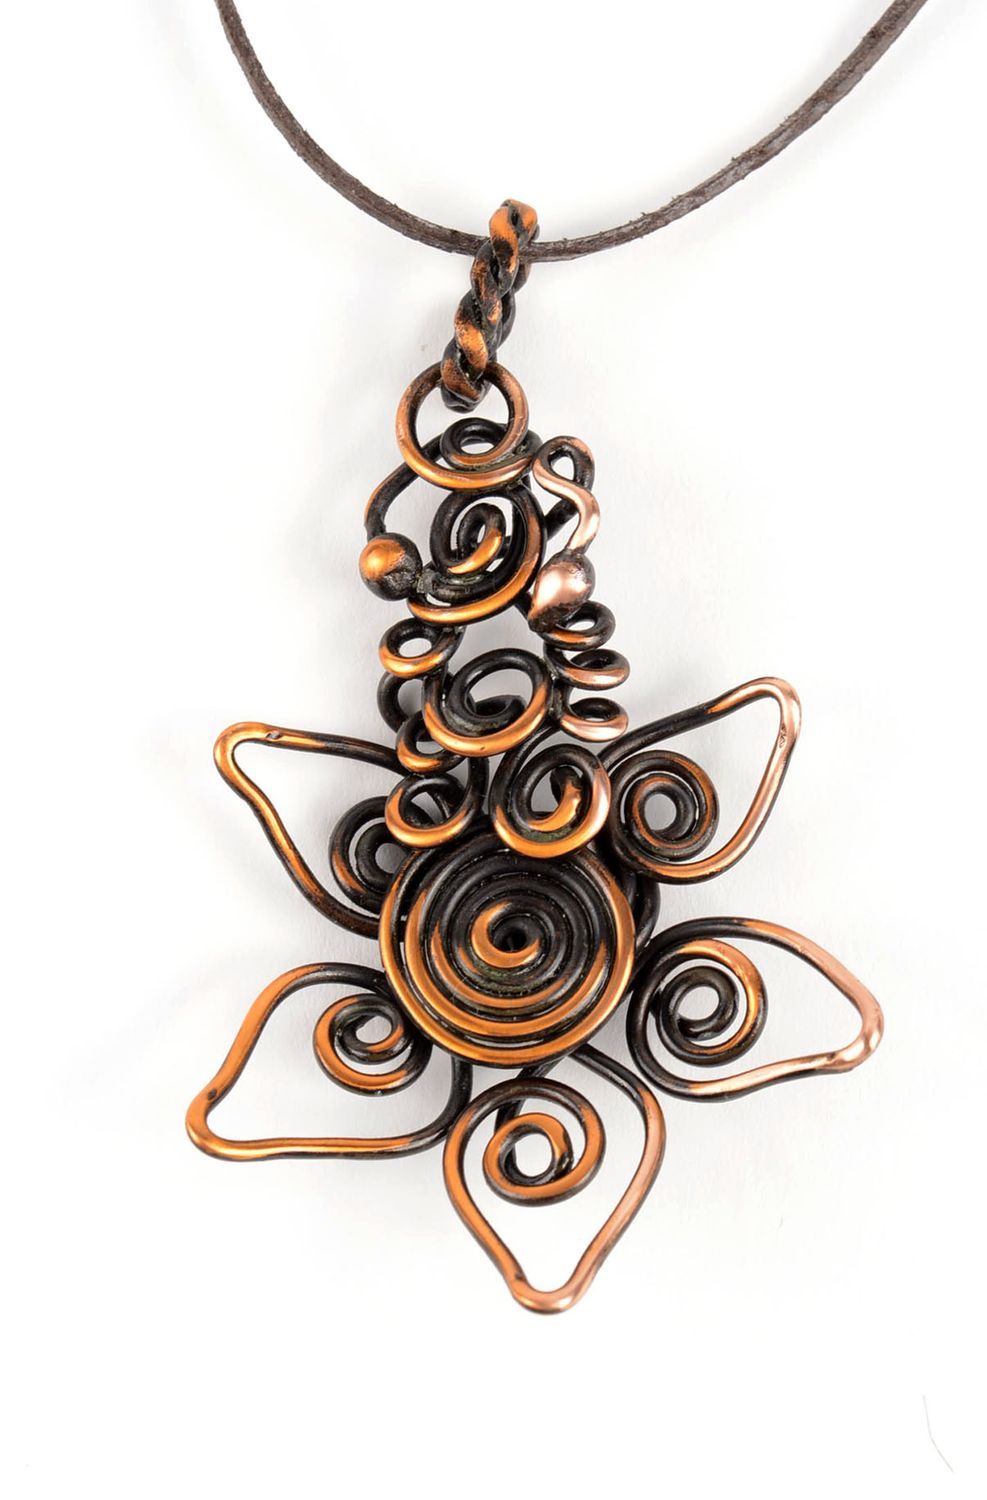 Handmade pendant unusual pendant designer accessory metal pendant gift ideas photo 1